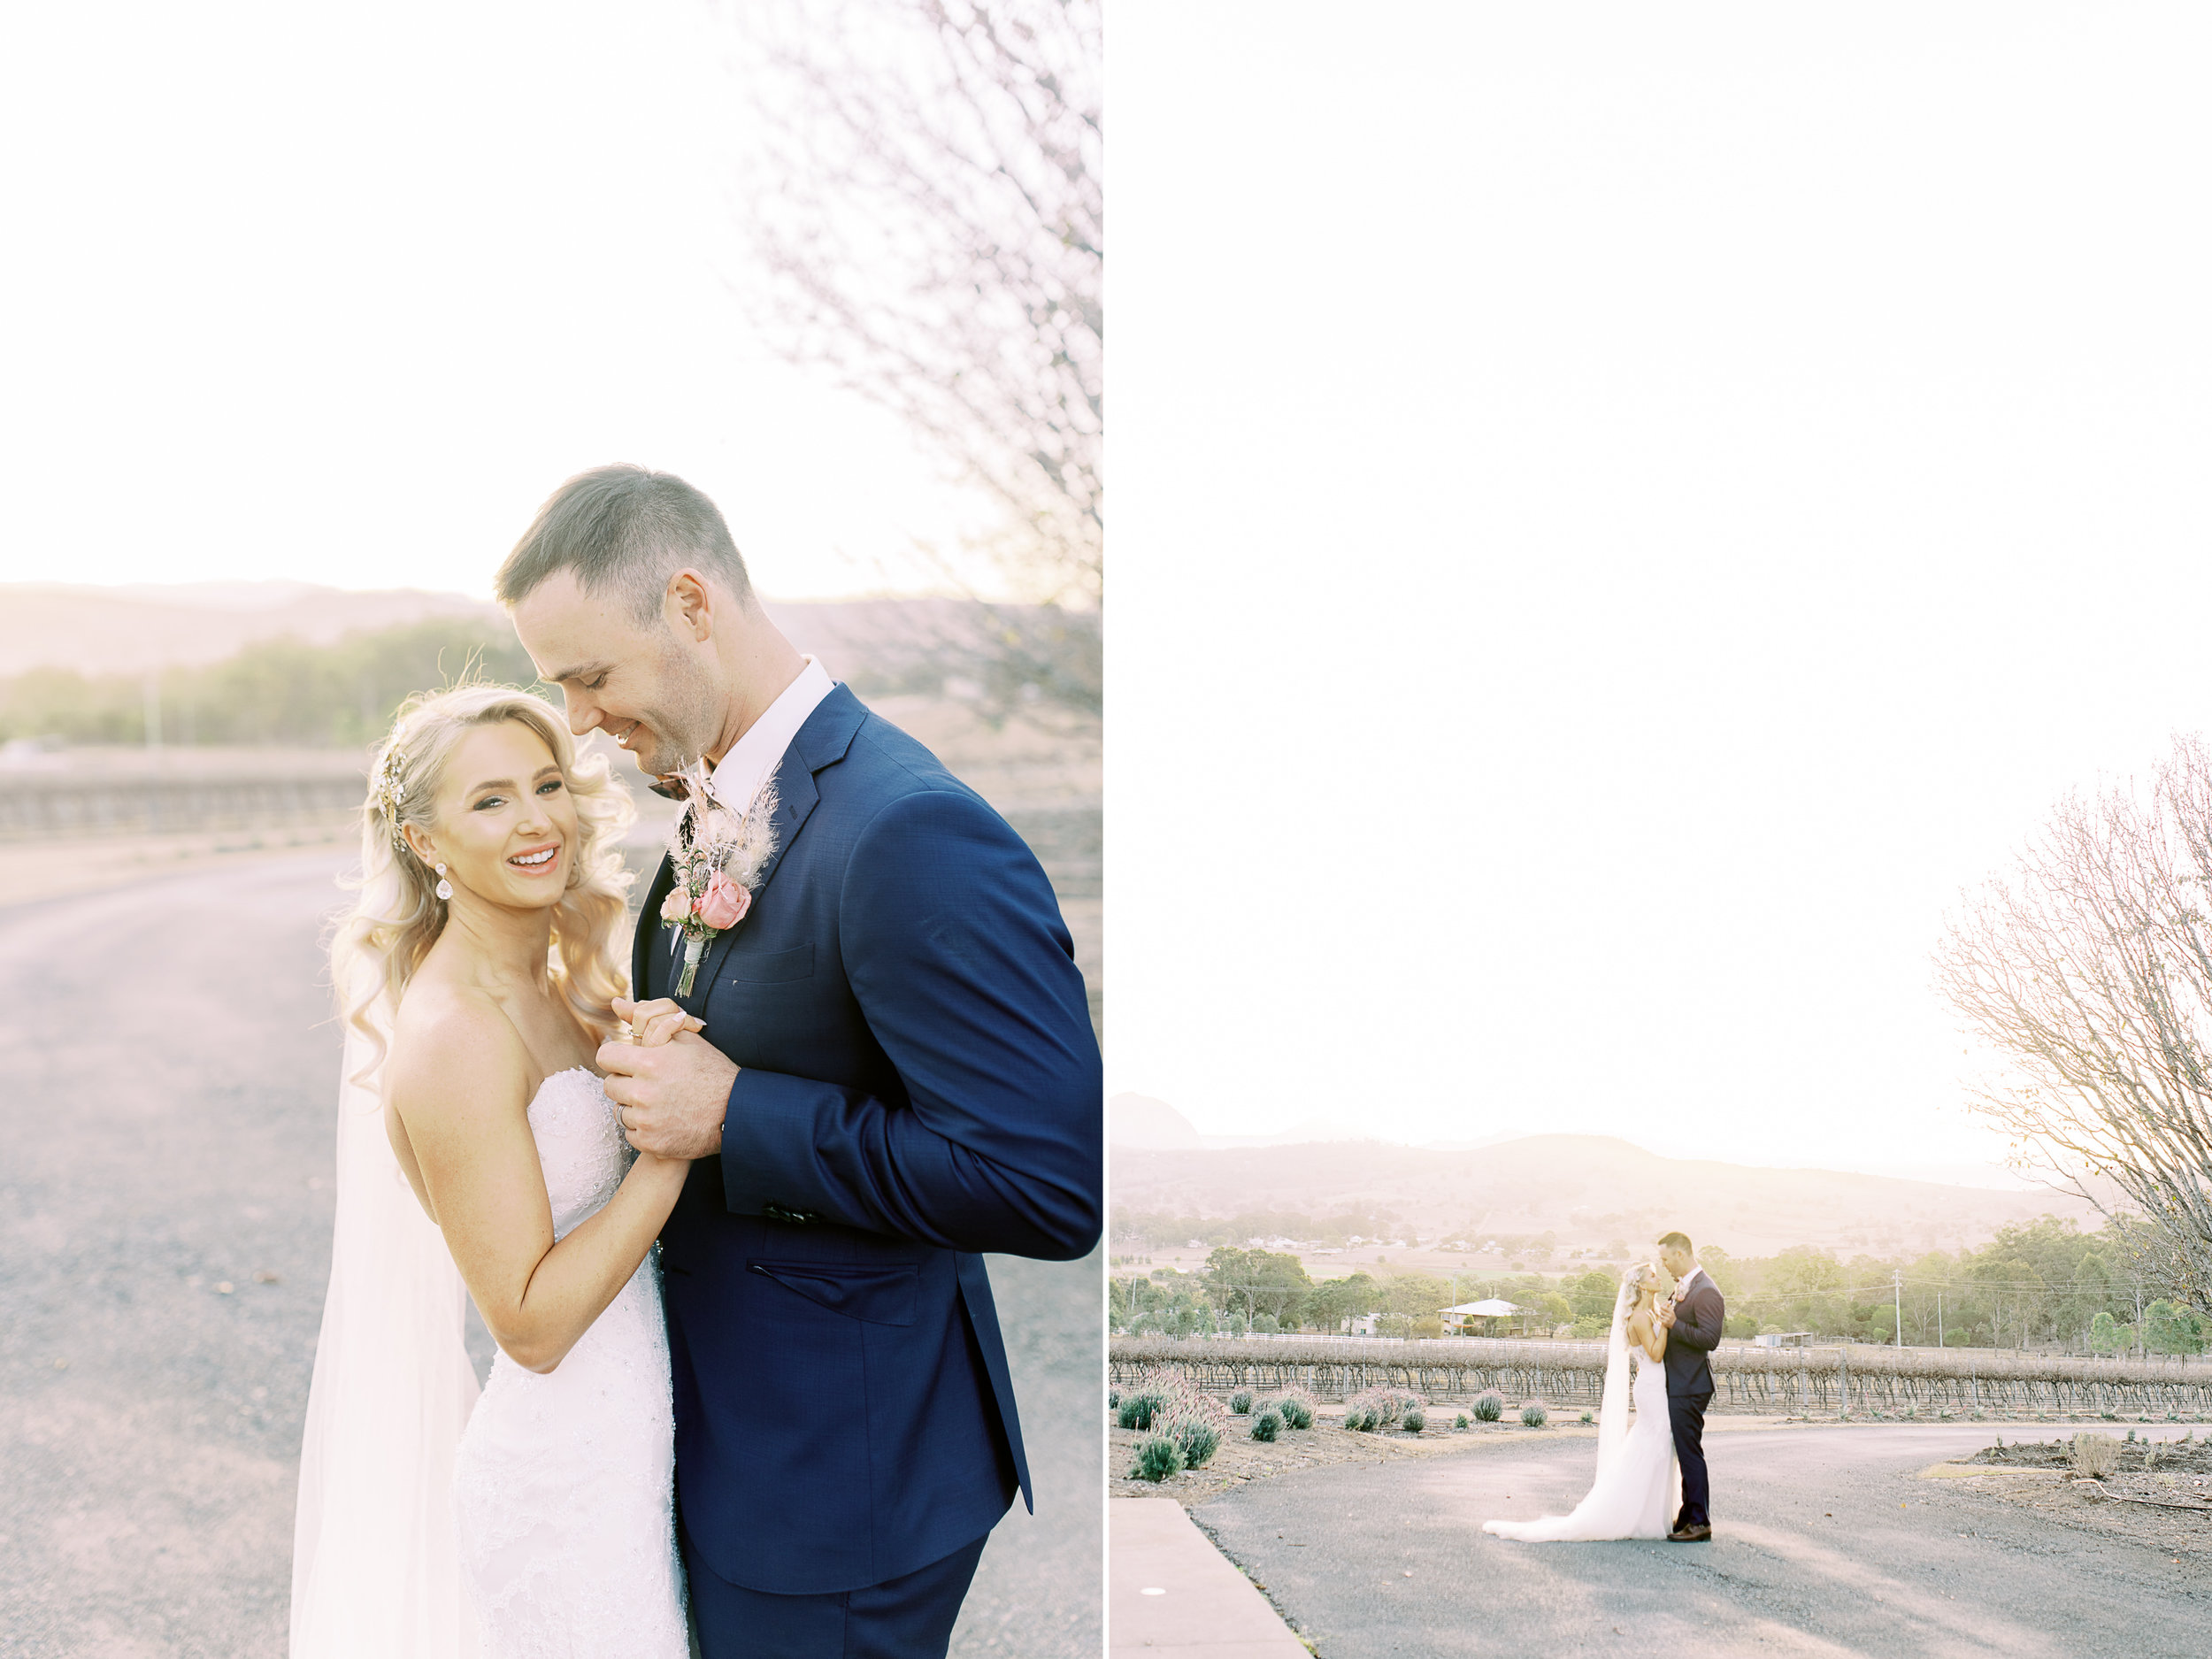 kooroomba-lavendar-farm-film-photography-wedding-photography-romantic-23.jpg